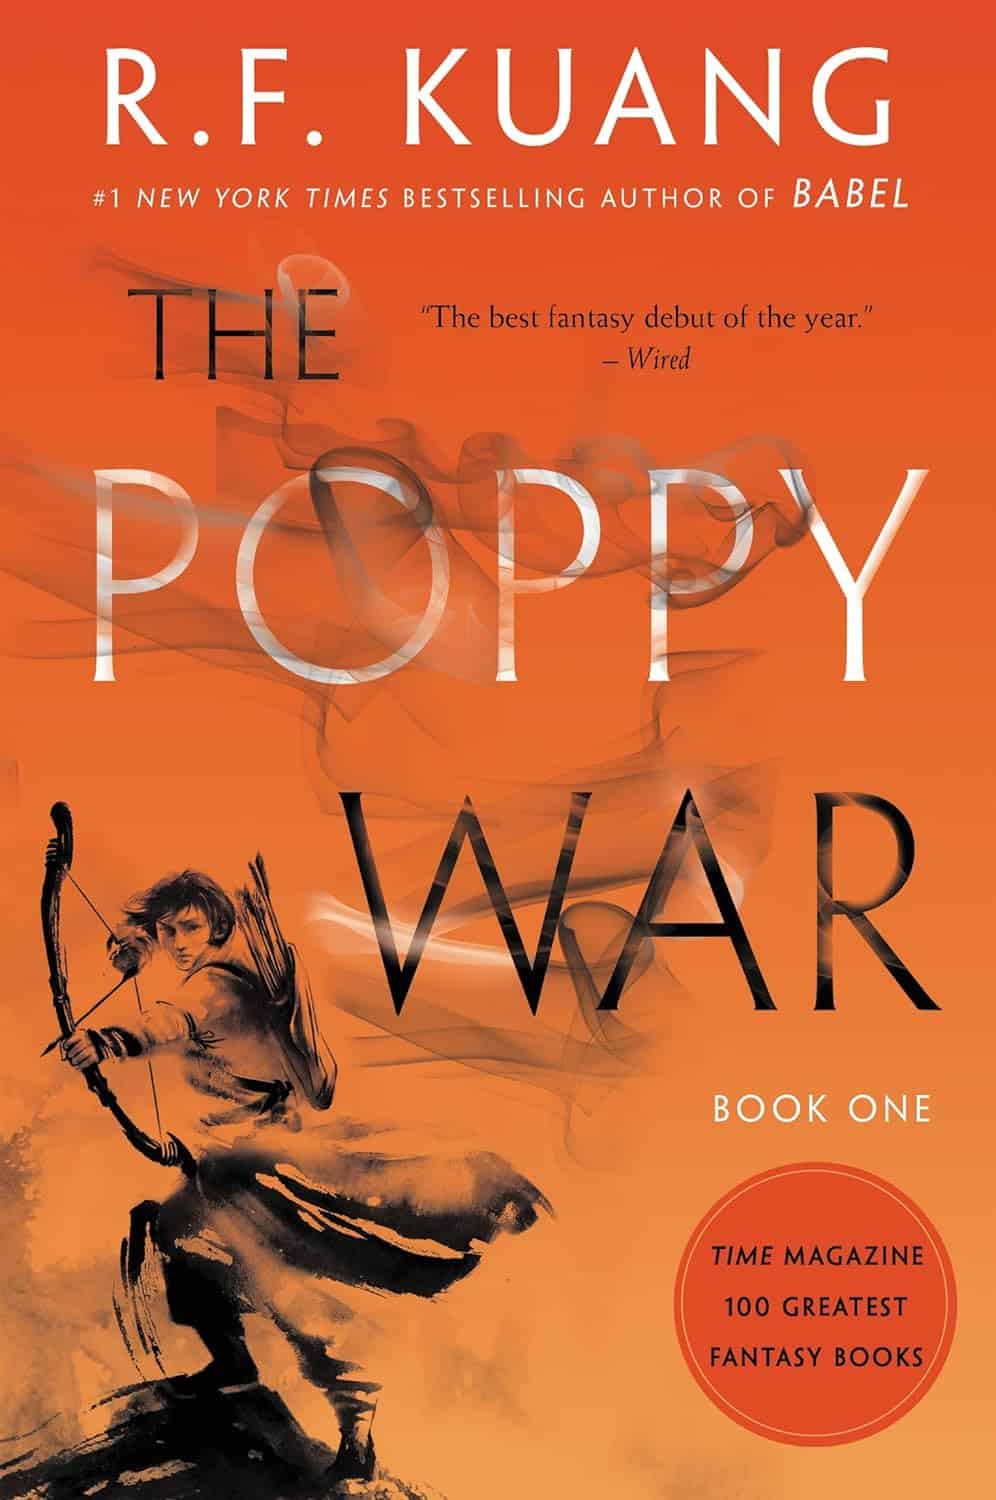 The Poppy War, R.F. Kuang